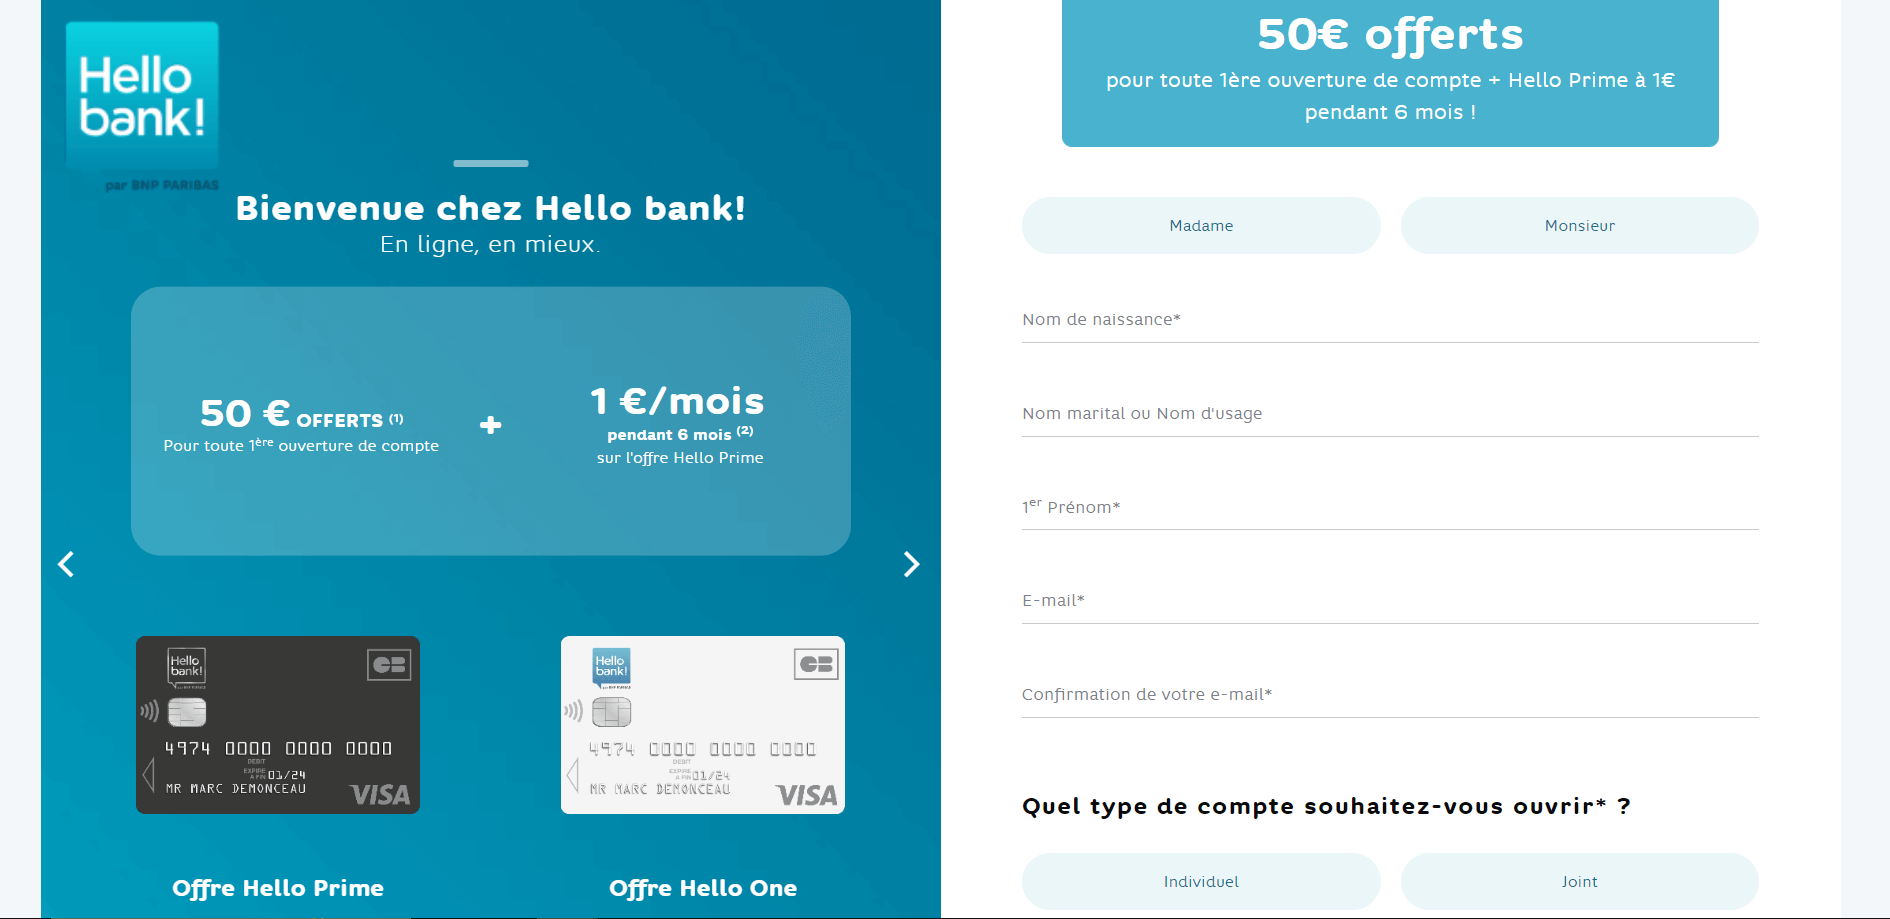 Plateforme bancaire digitale, Hello Bank